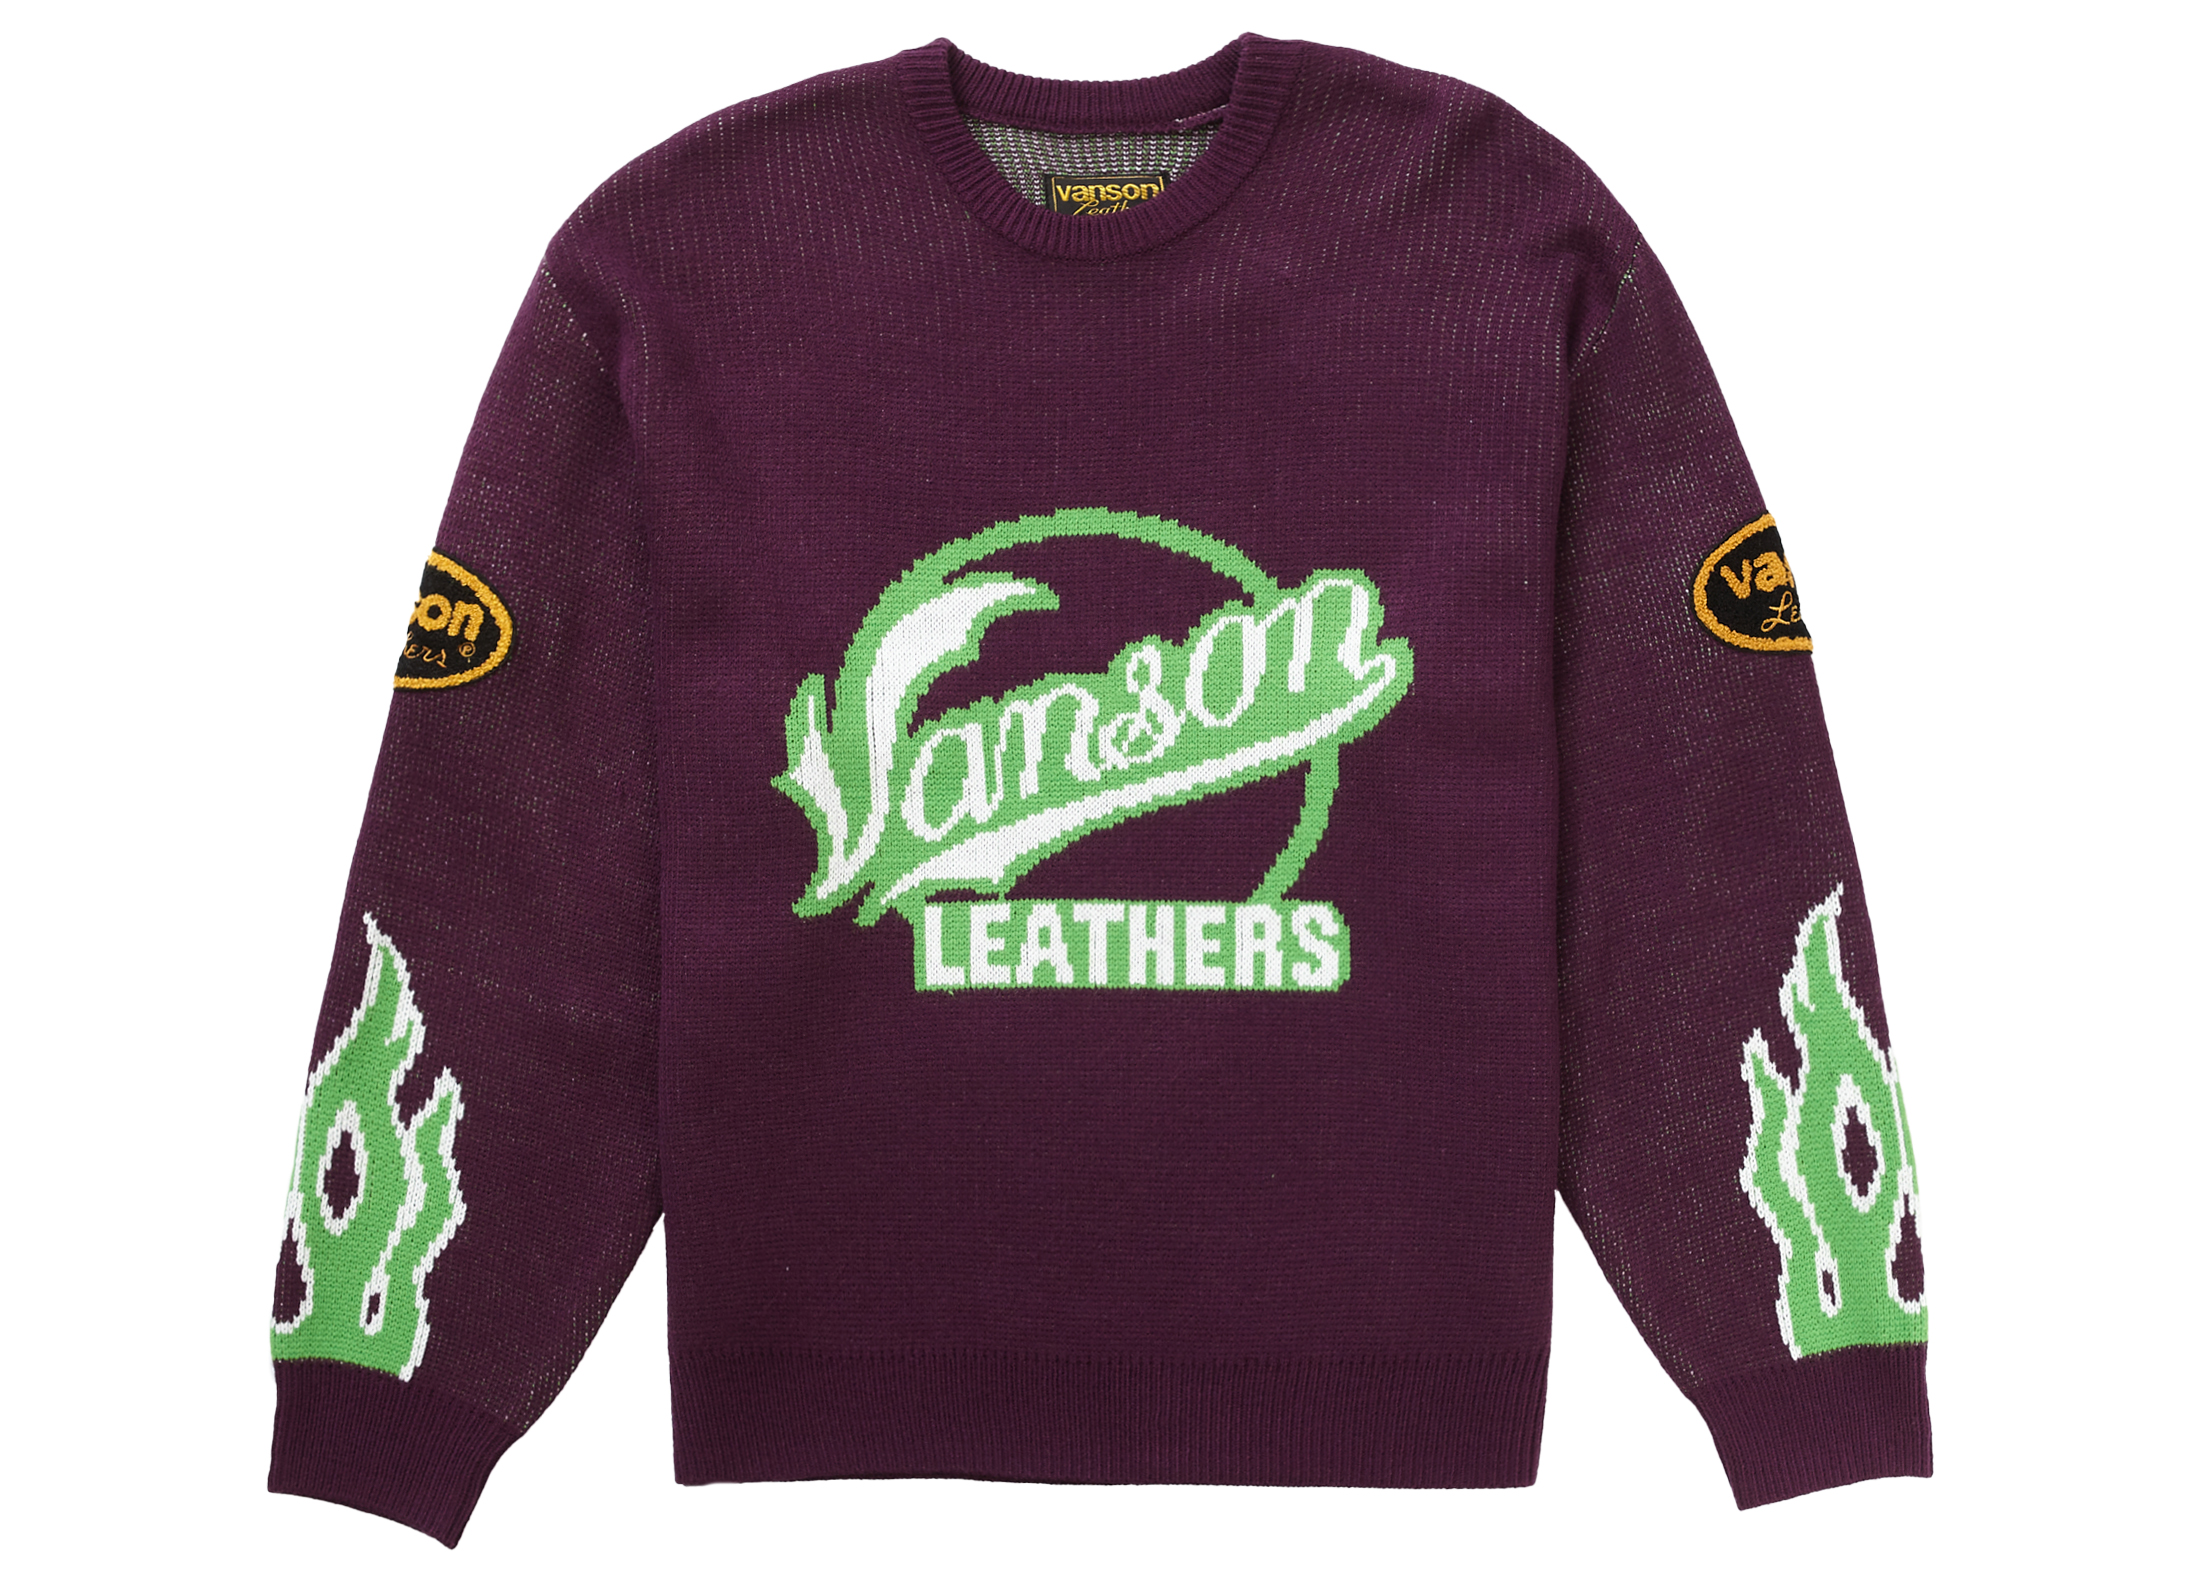 Supreme / Vanson Leathers Sweater XL